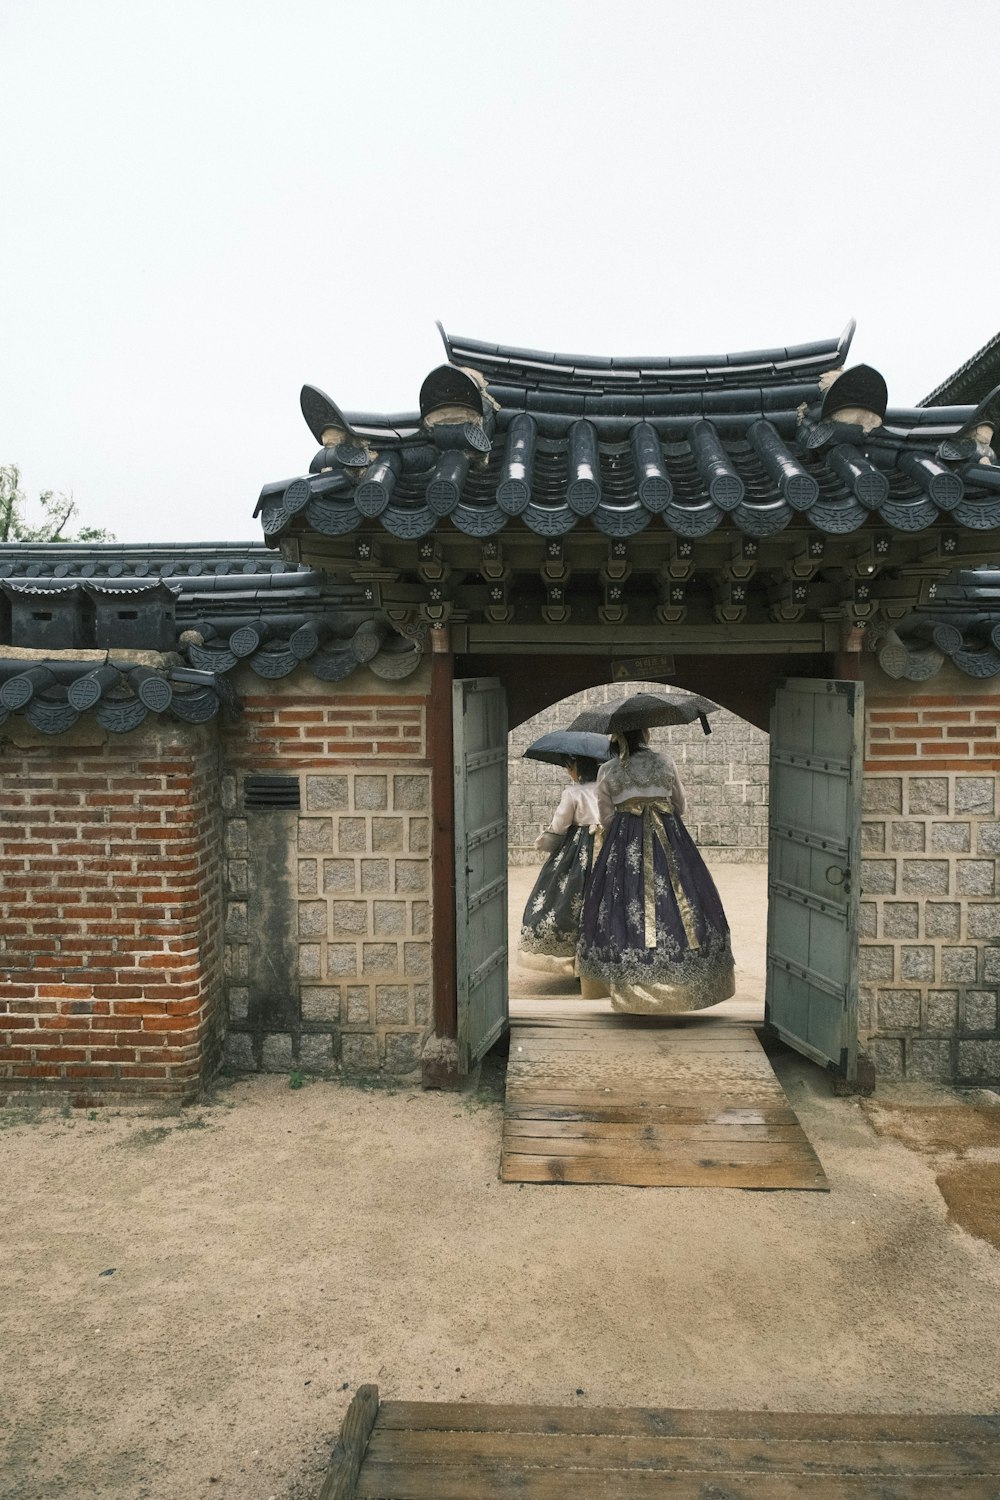 a woman with an umbrella walks through a gate